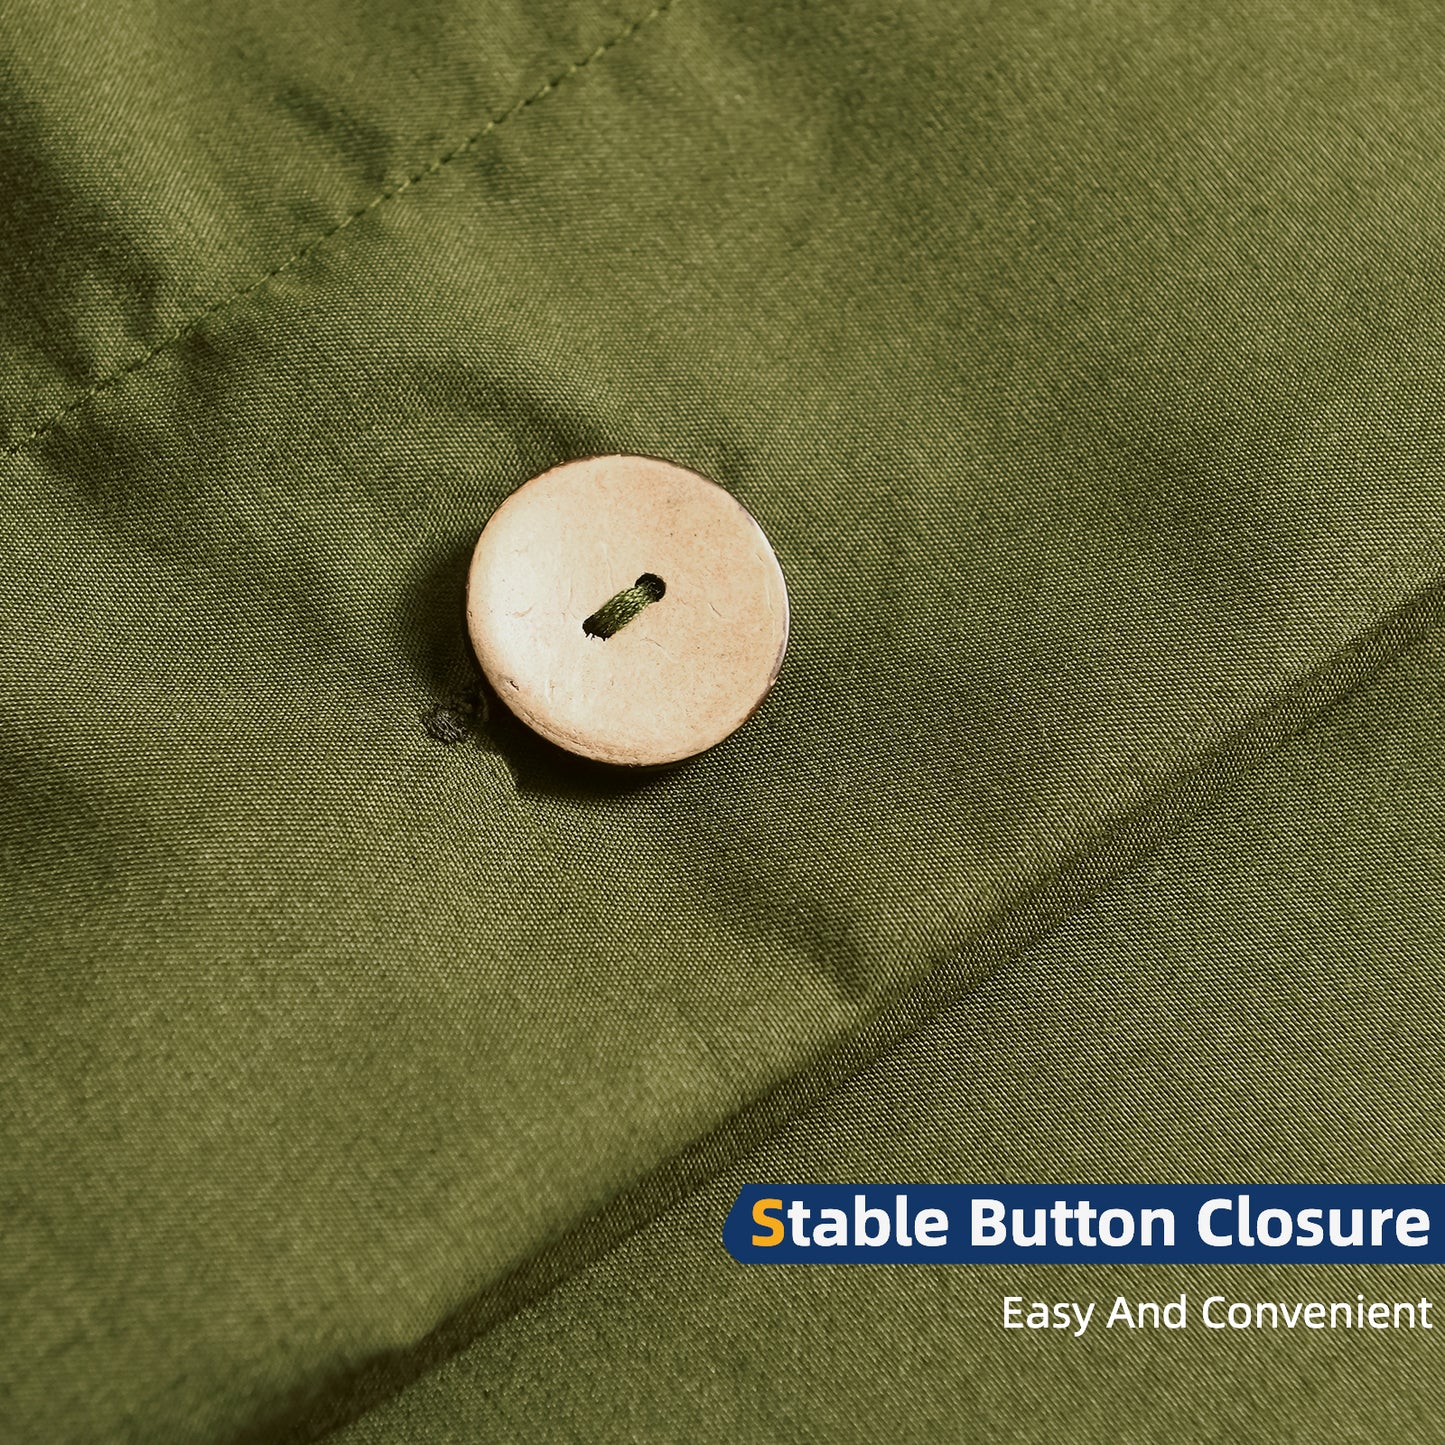 Argstar Button Closure Duvet Cover Set Olive Green Color